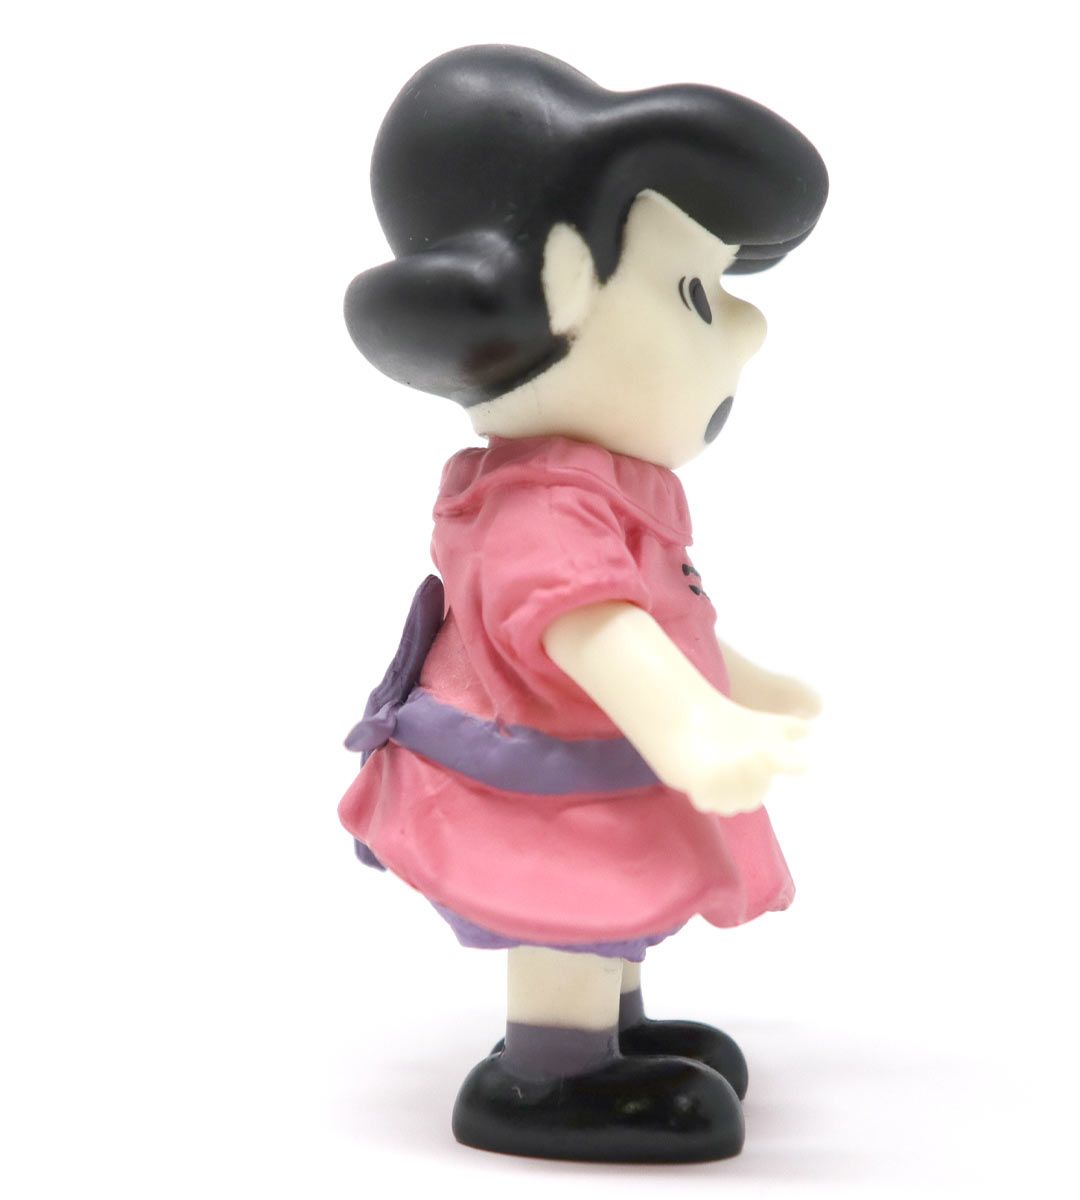 Figurine UDF Peanuts - Lucy (bouche ouverte) Vintage Vers.